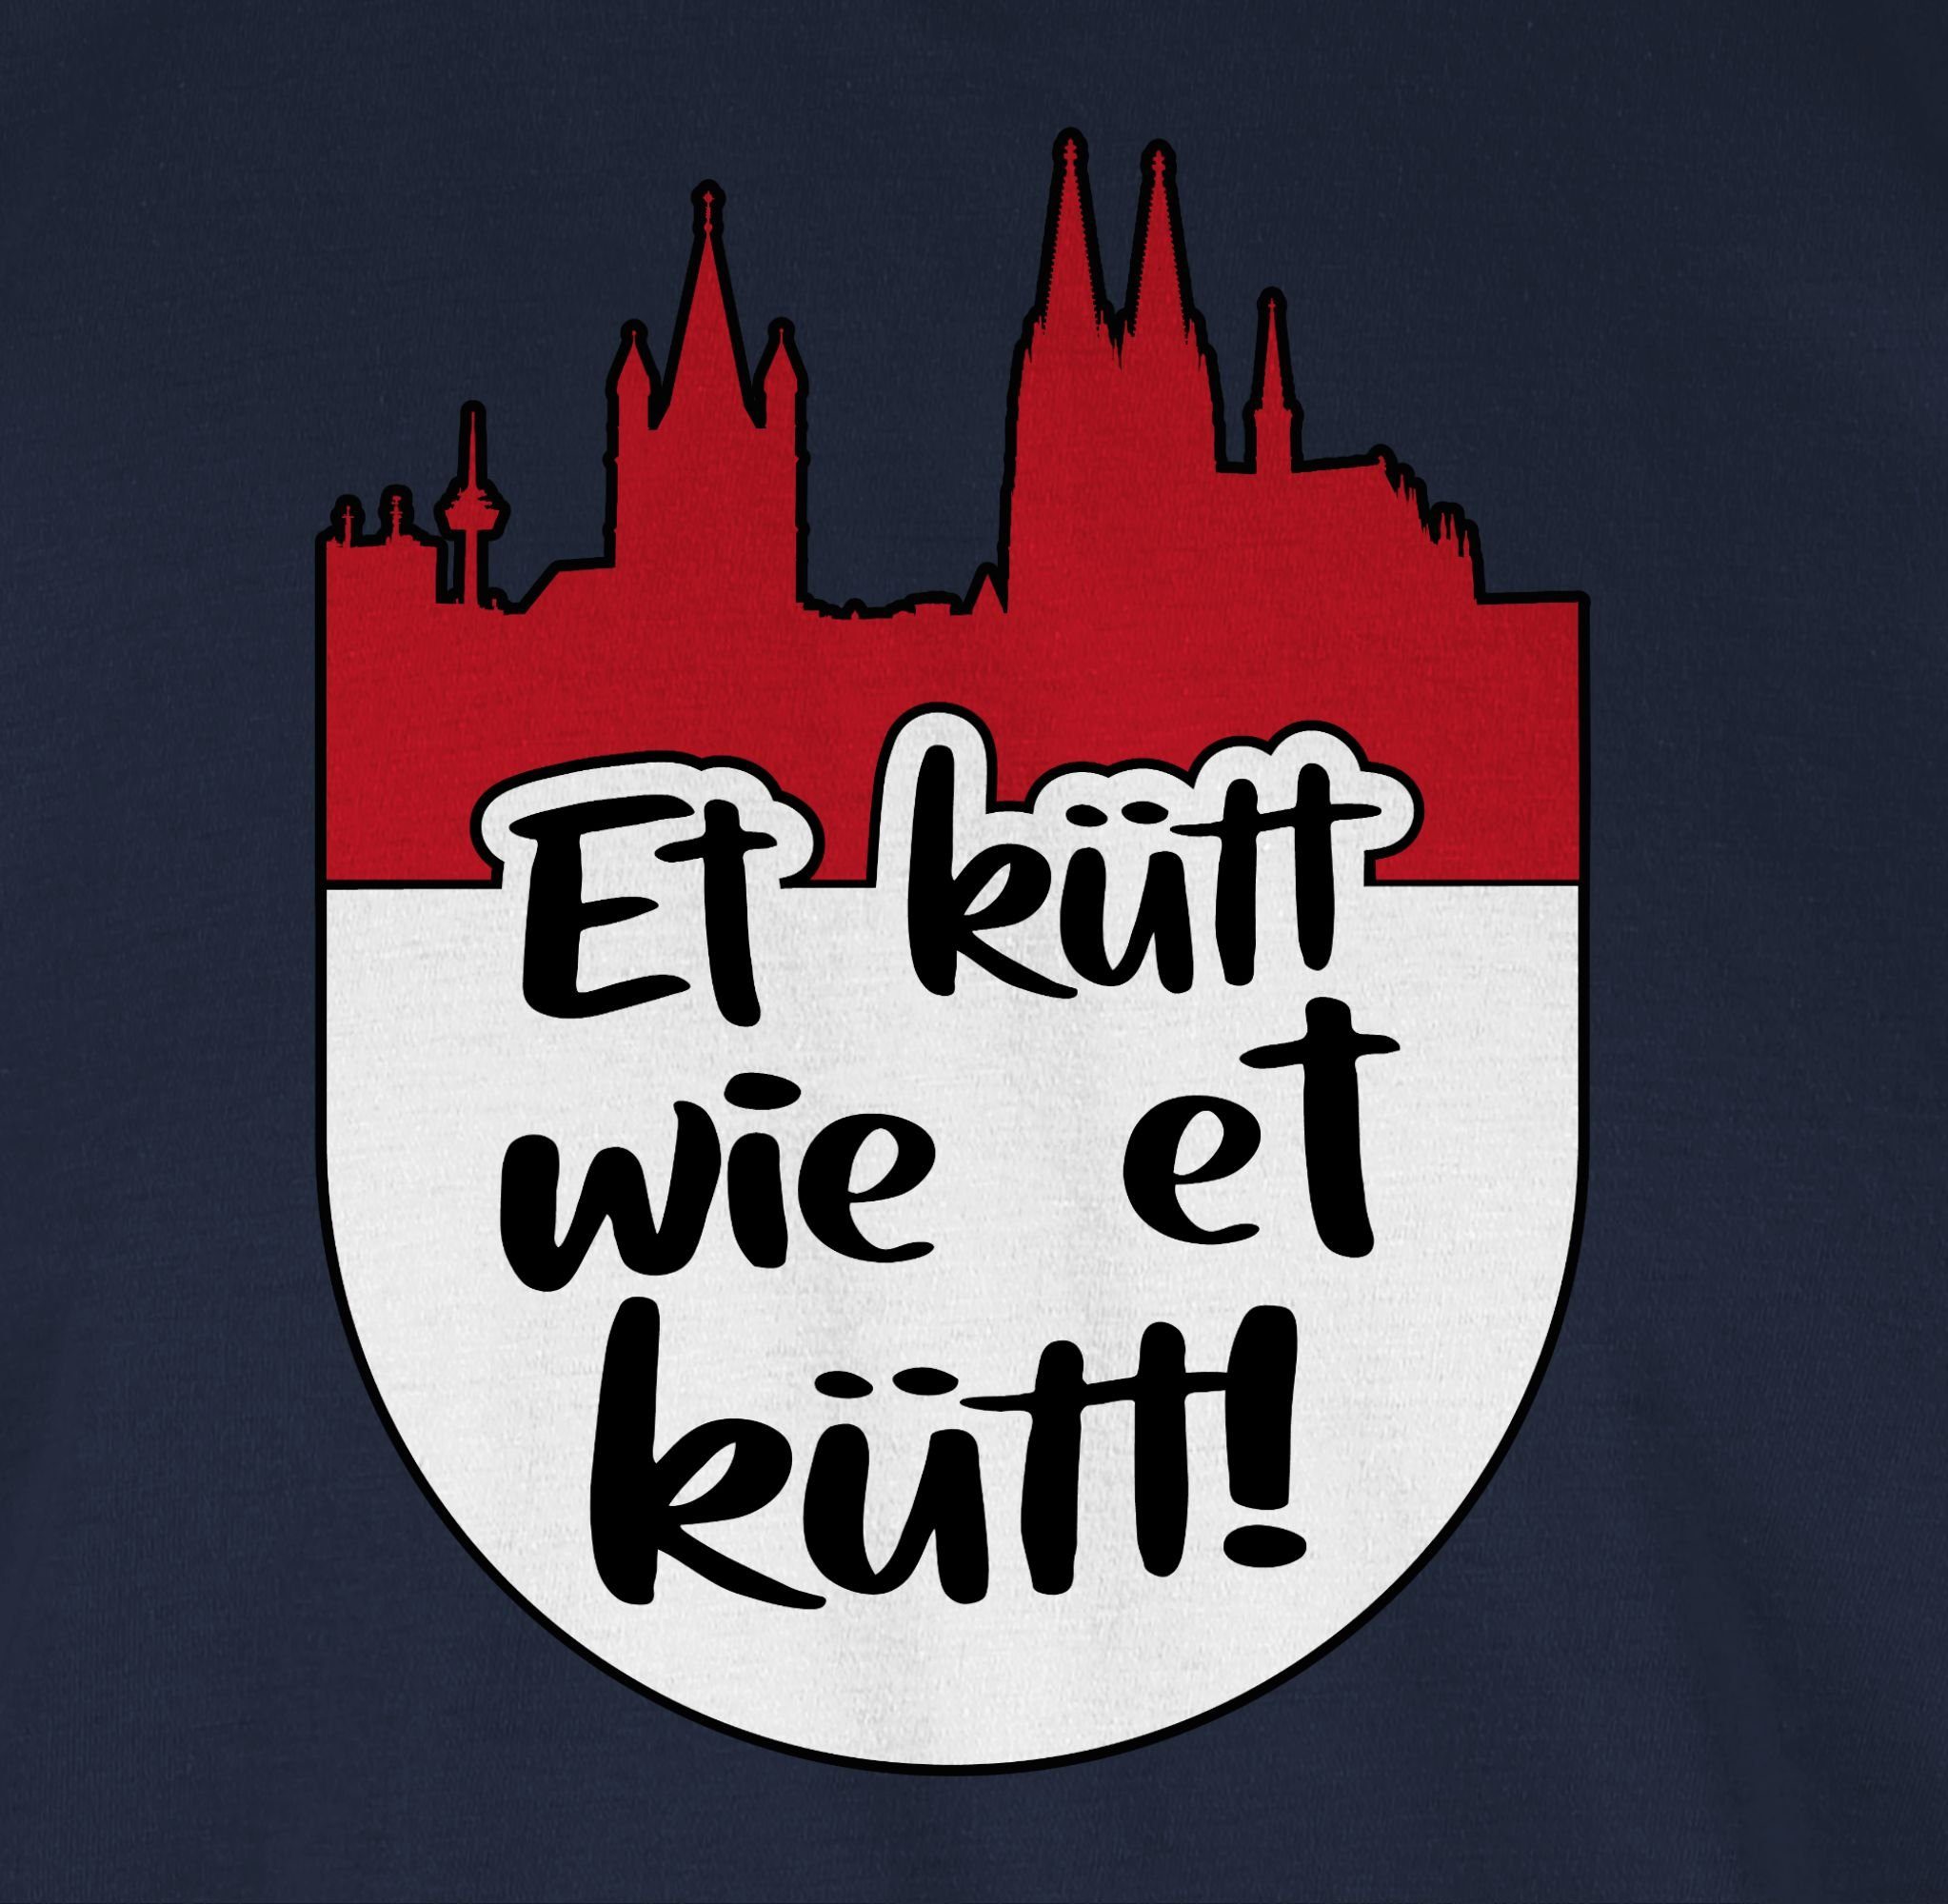 Shirtracer T-Shirt Et kütt wie Karneval Blau rot 3 Köln weiß kütt! Kölner Grundgesetz Echte Outfit Navy et - Kölsch